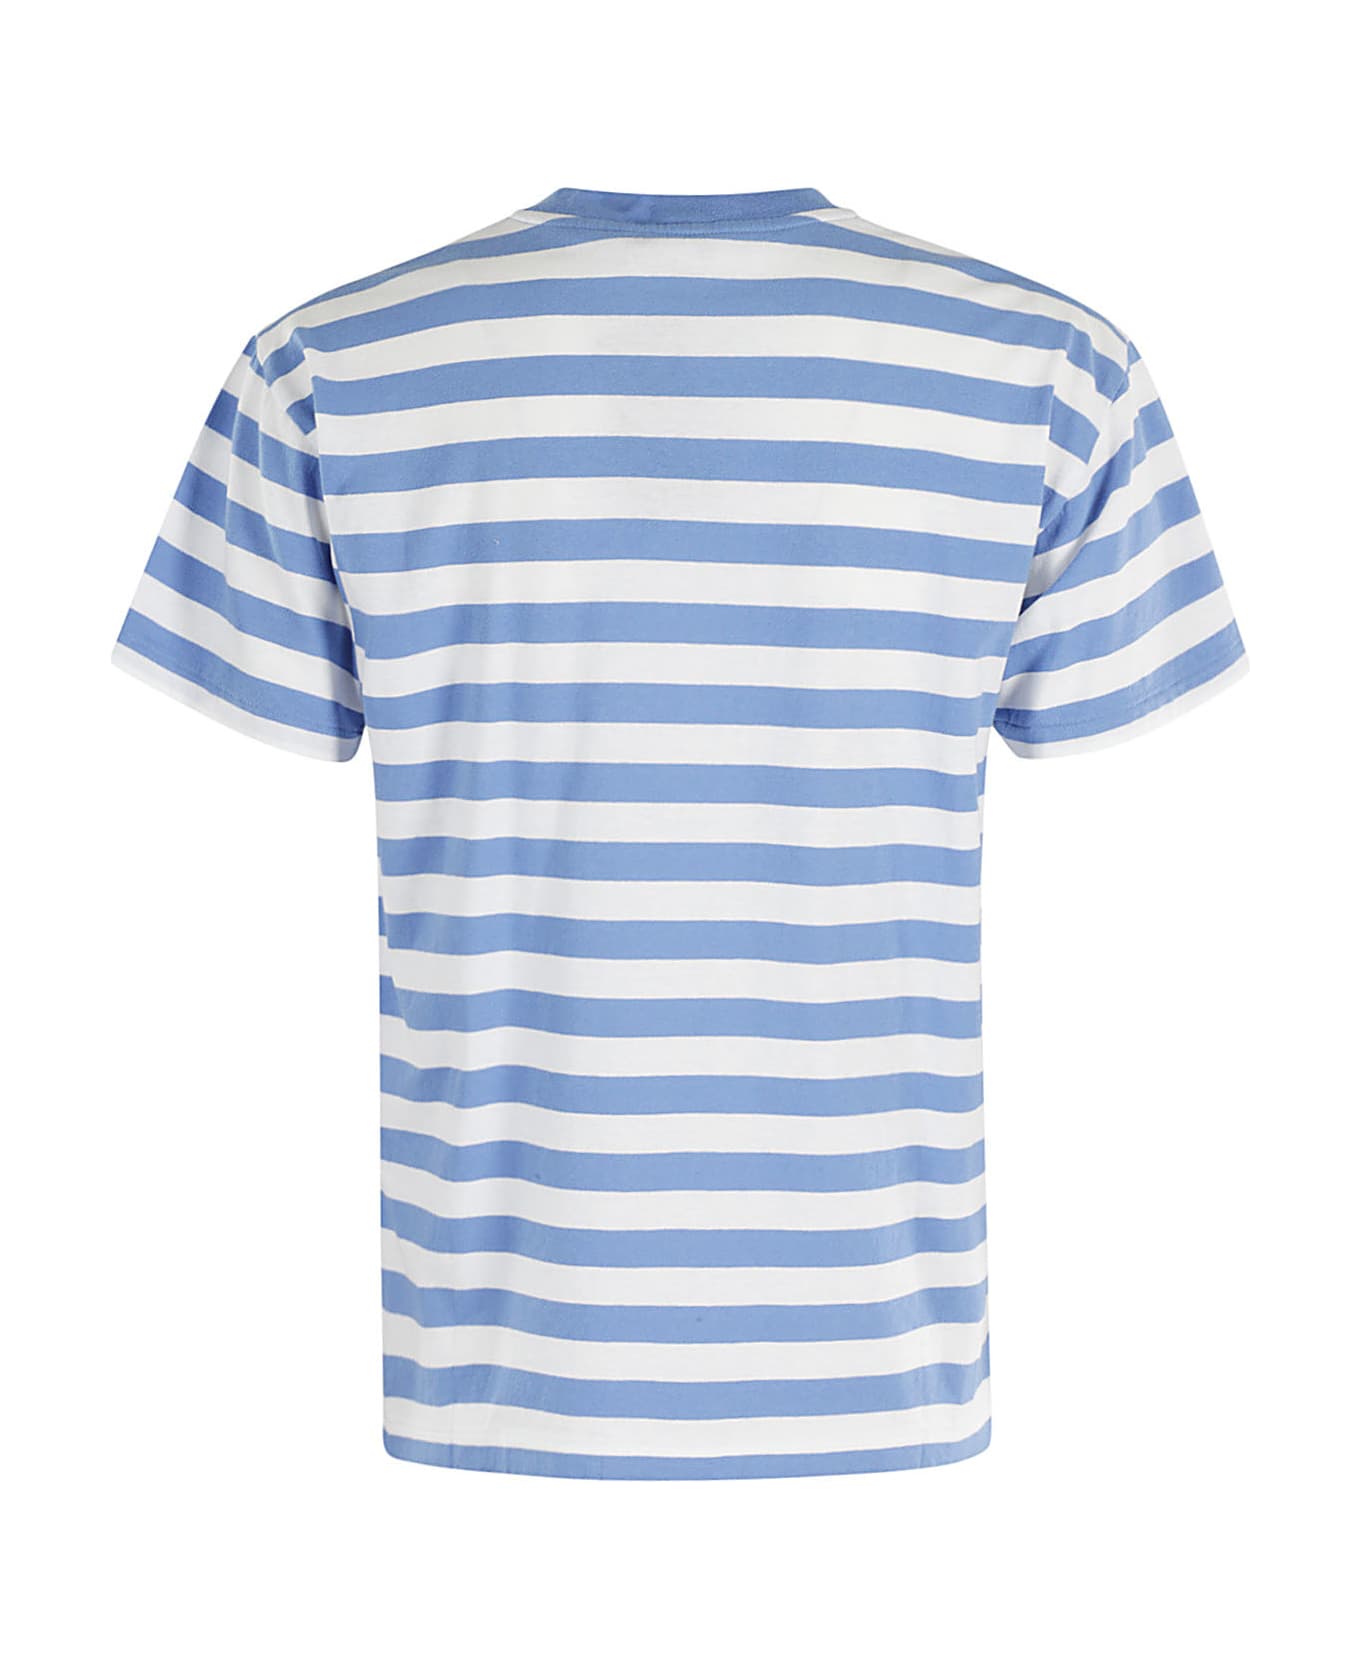 Polo Ralph Lauren Stripes - Resort Blue White Stripe